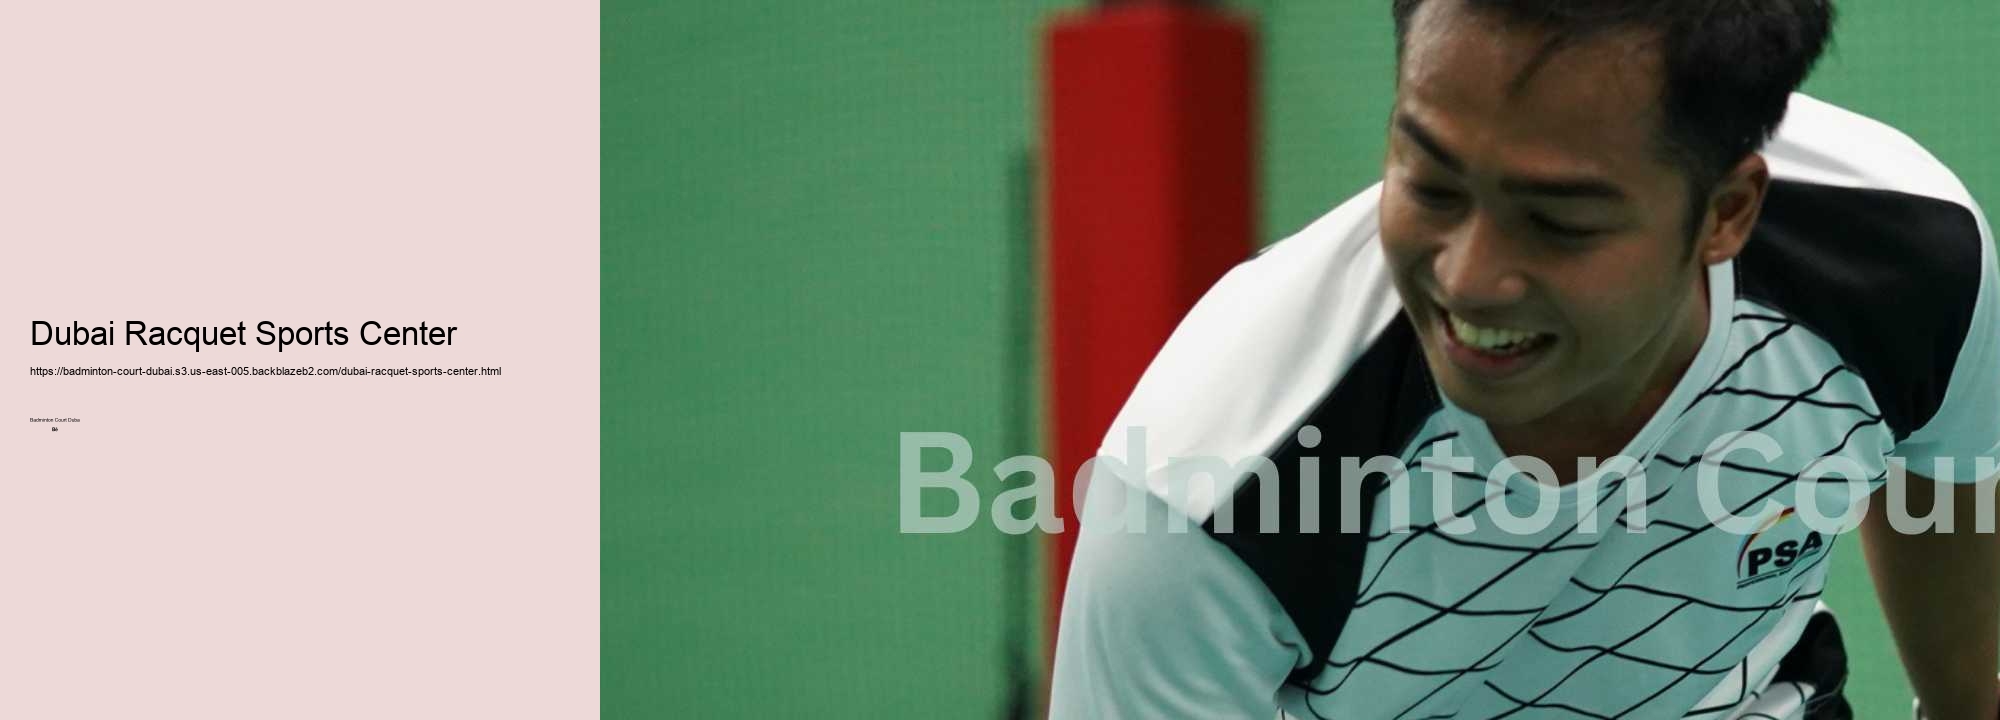 Dubai Racquet Sports Center